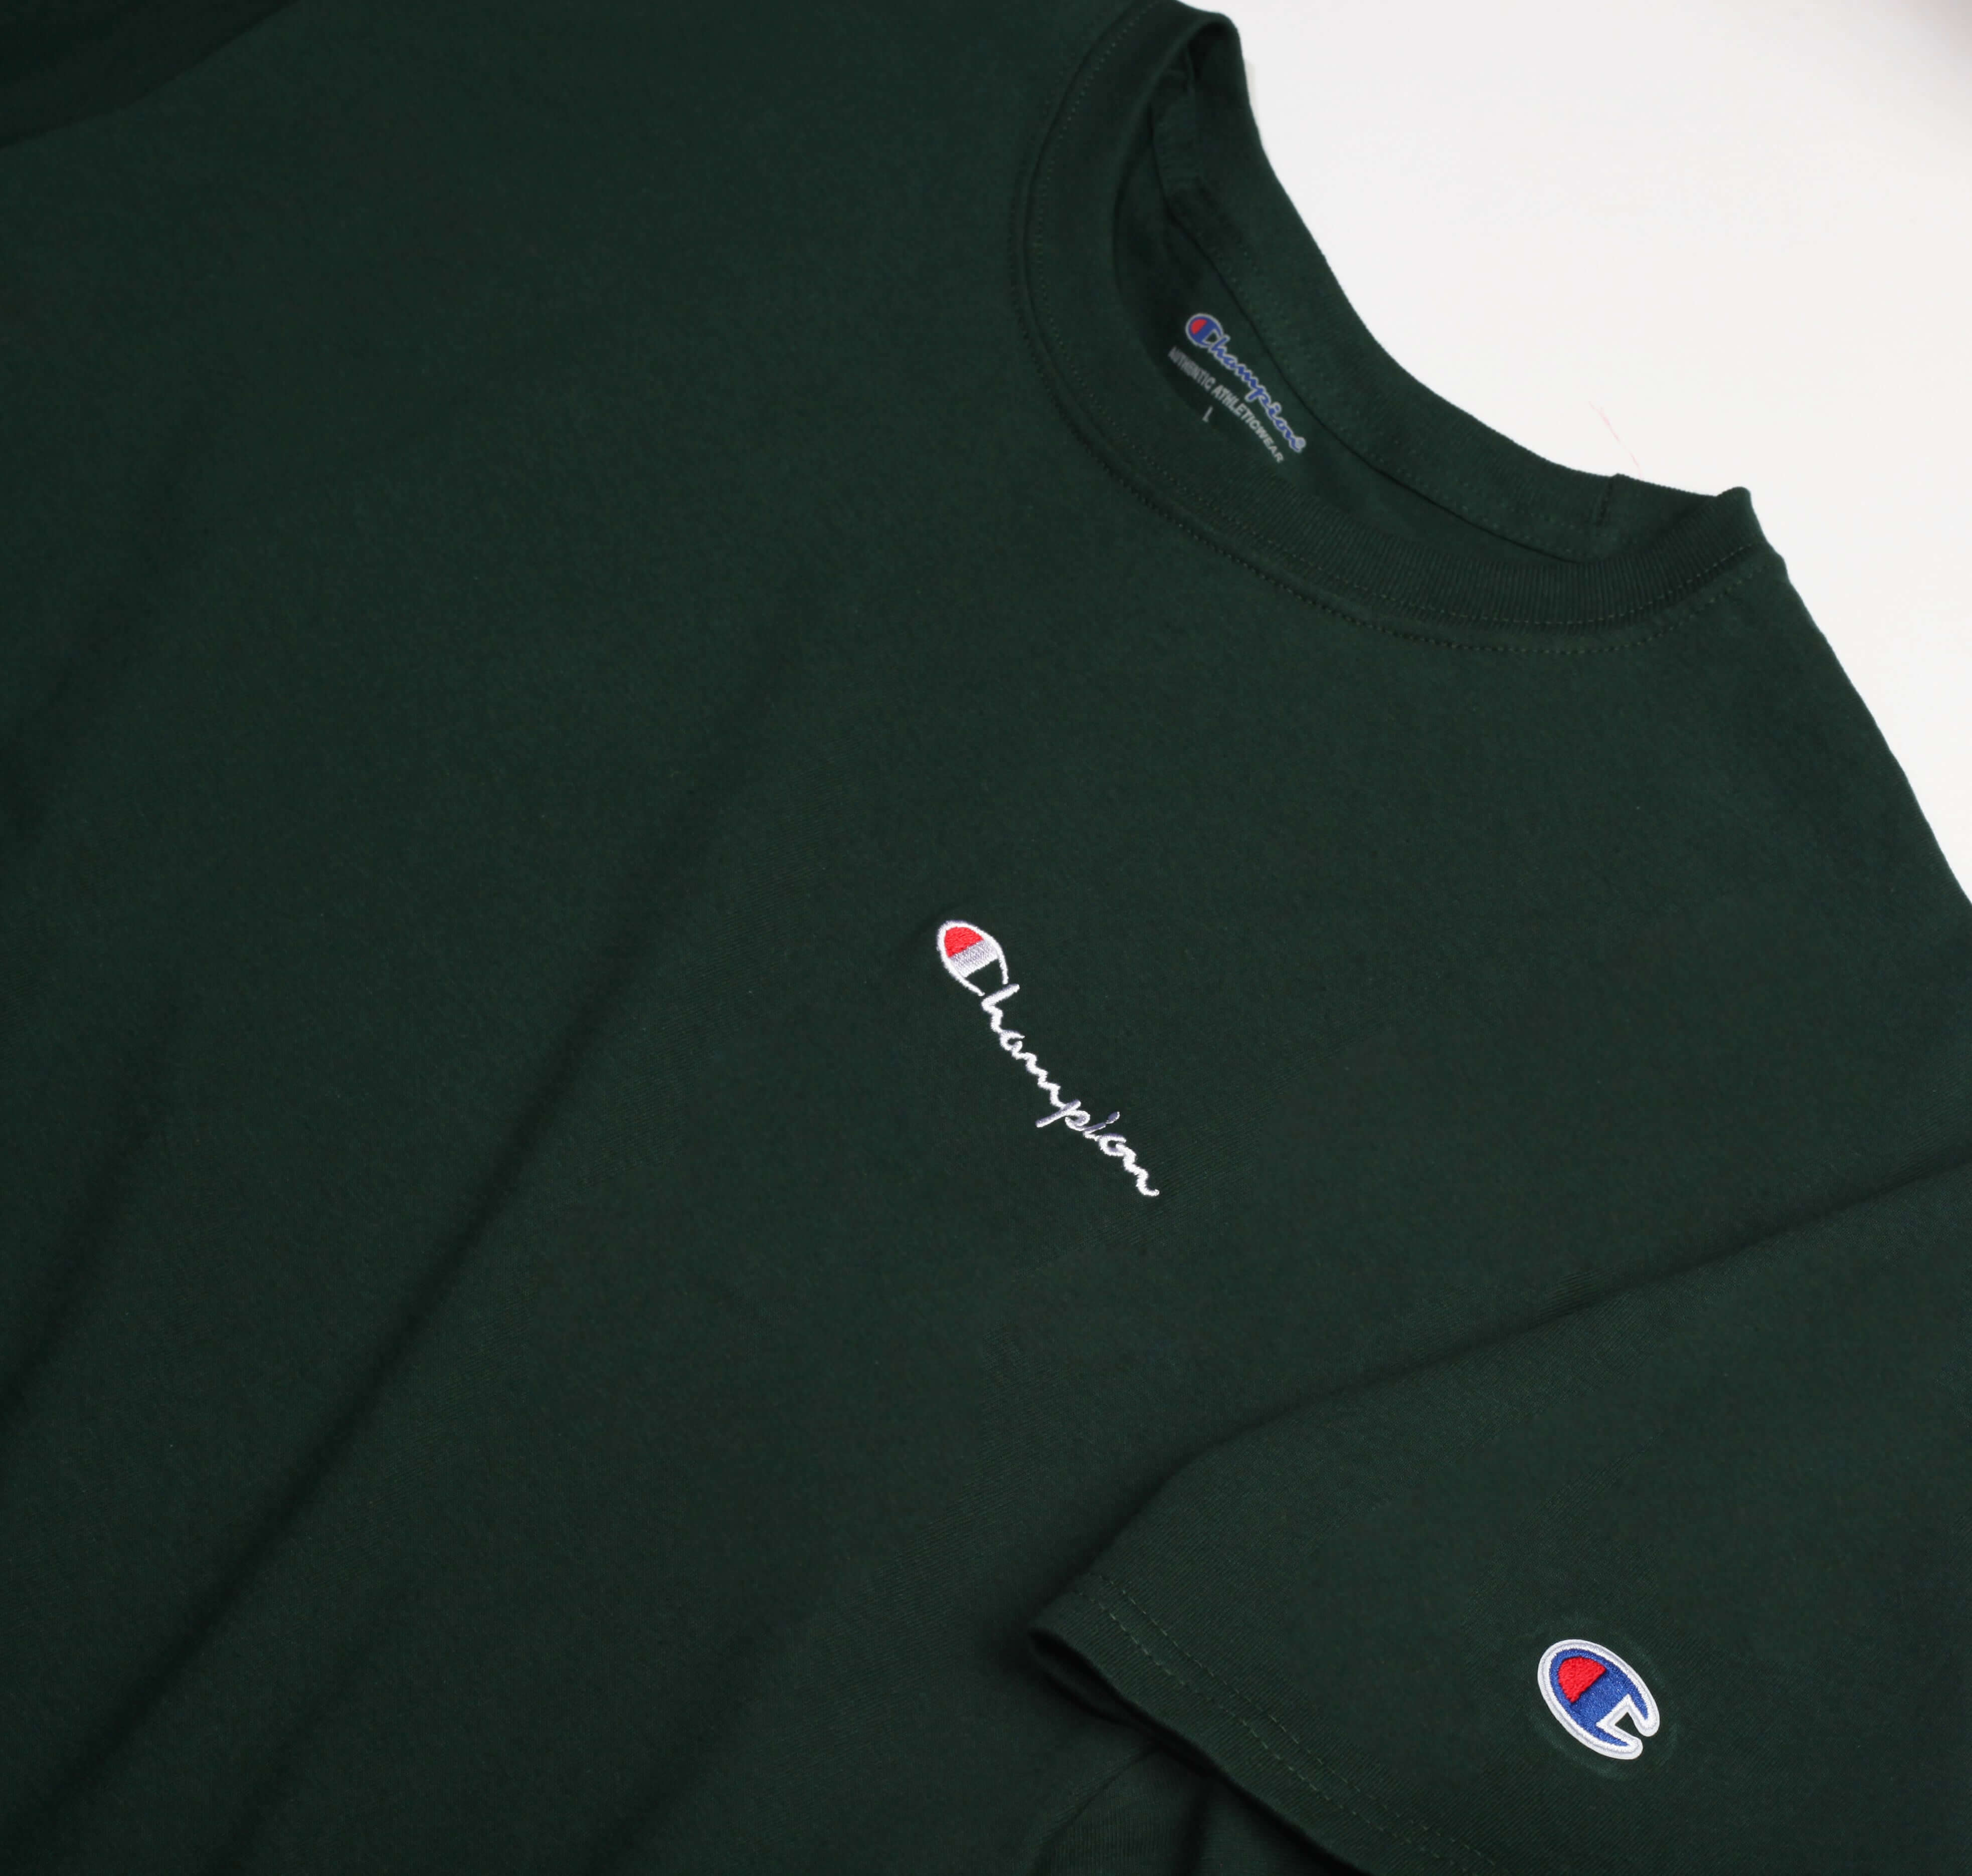 Champion Tagless Tshirt ,Embroidered Logo -  Dark Green